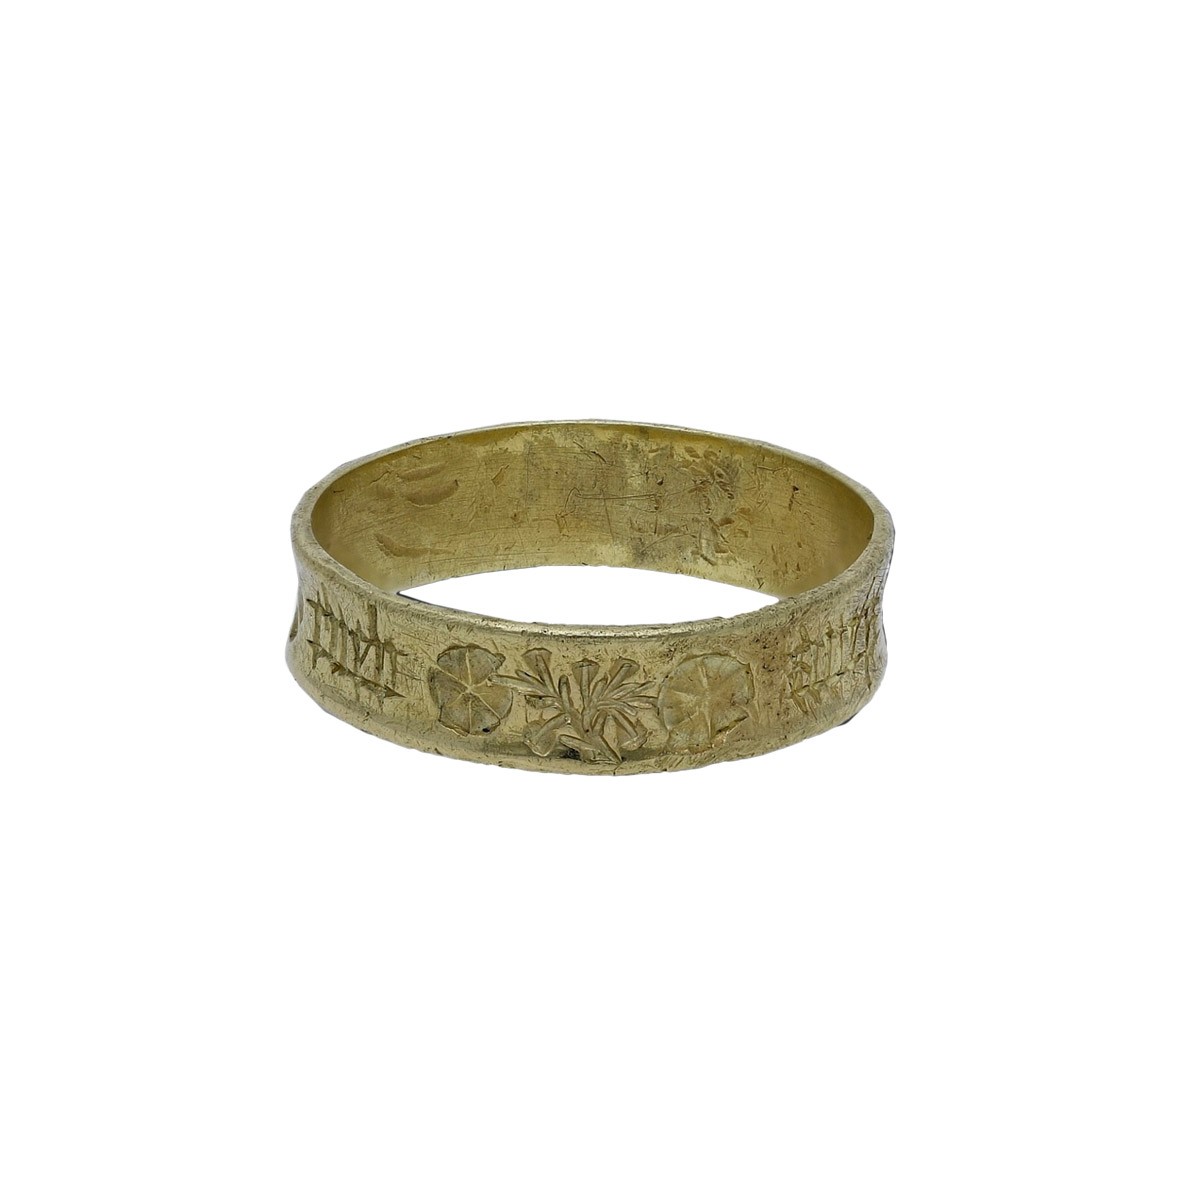 Gold black-letter posy ring, ‘MON COEUR AVEZ', England 15th century ...